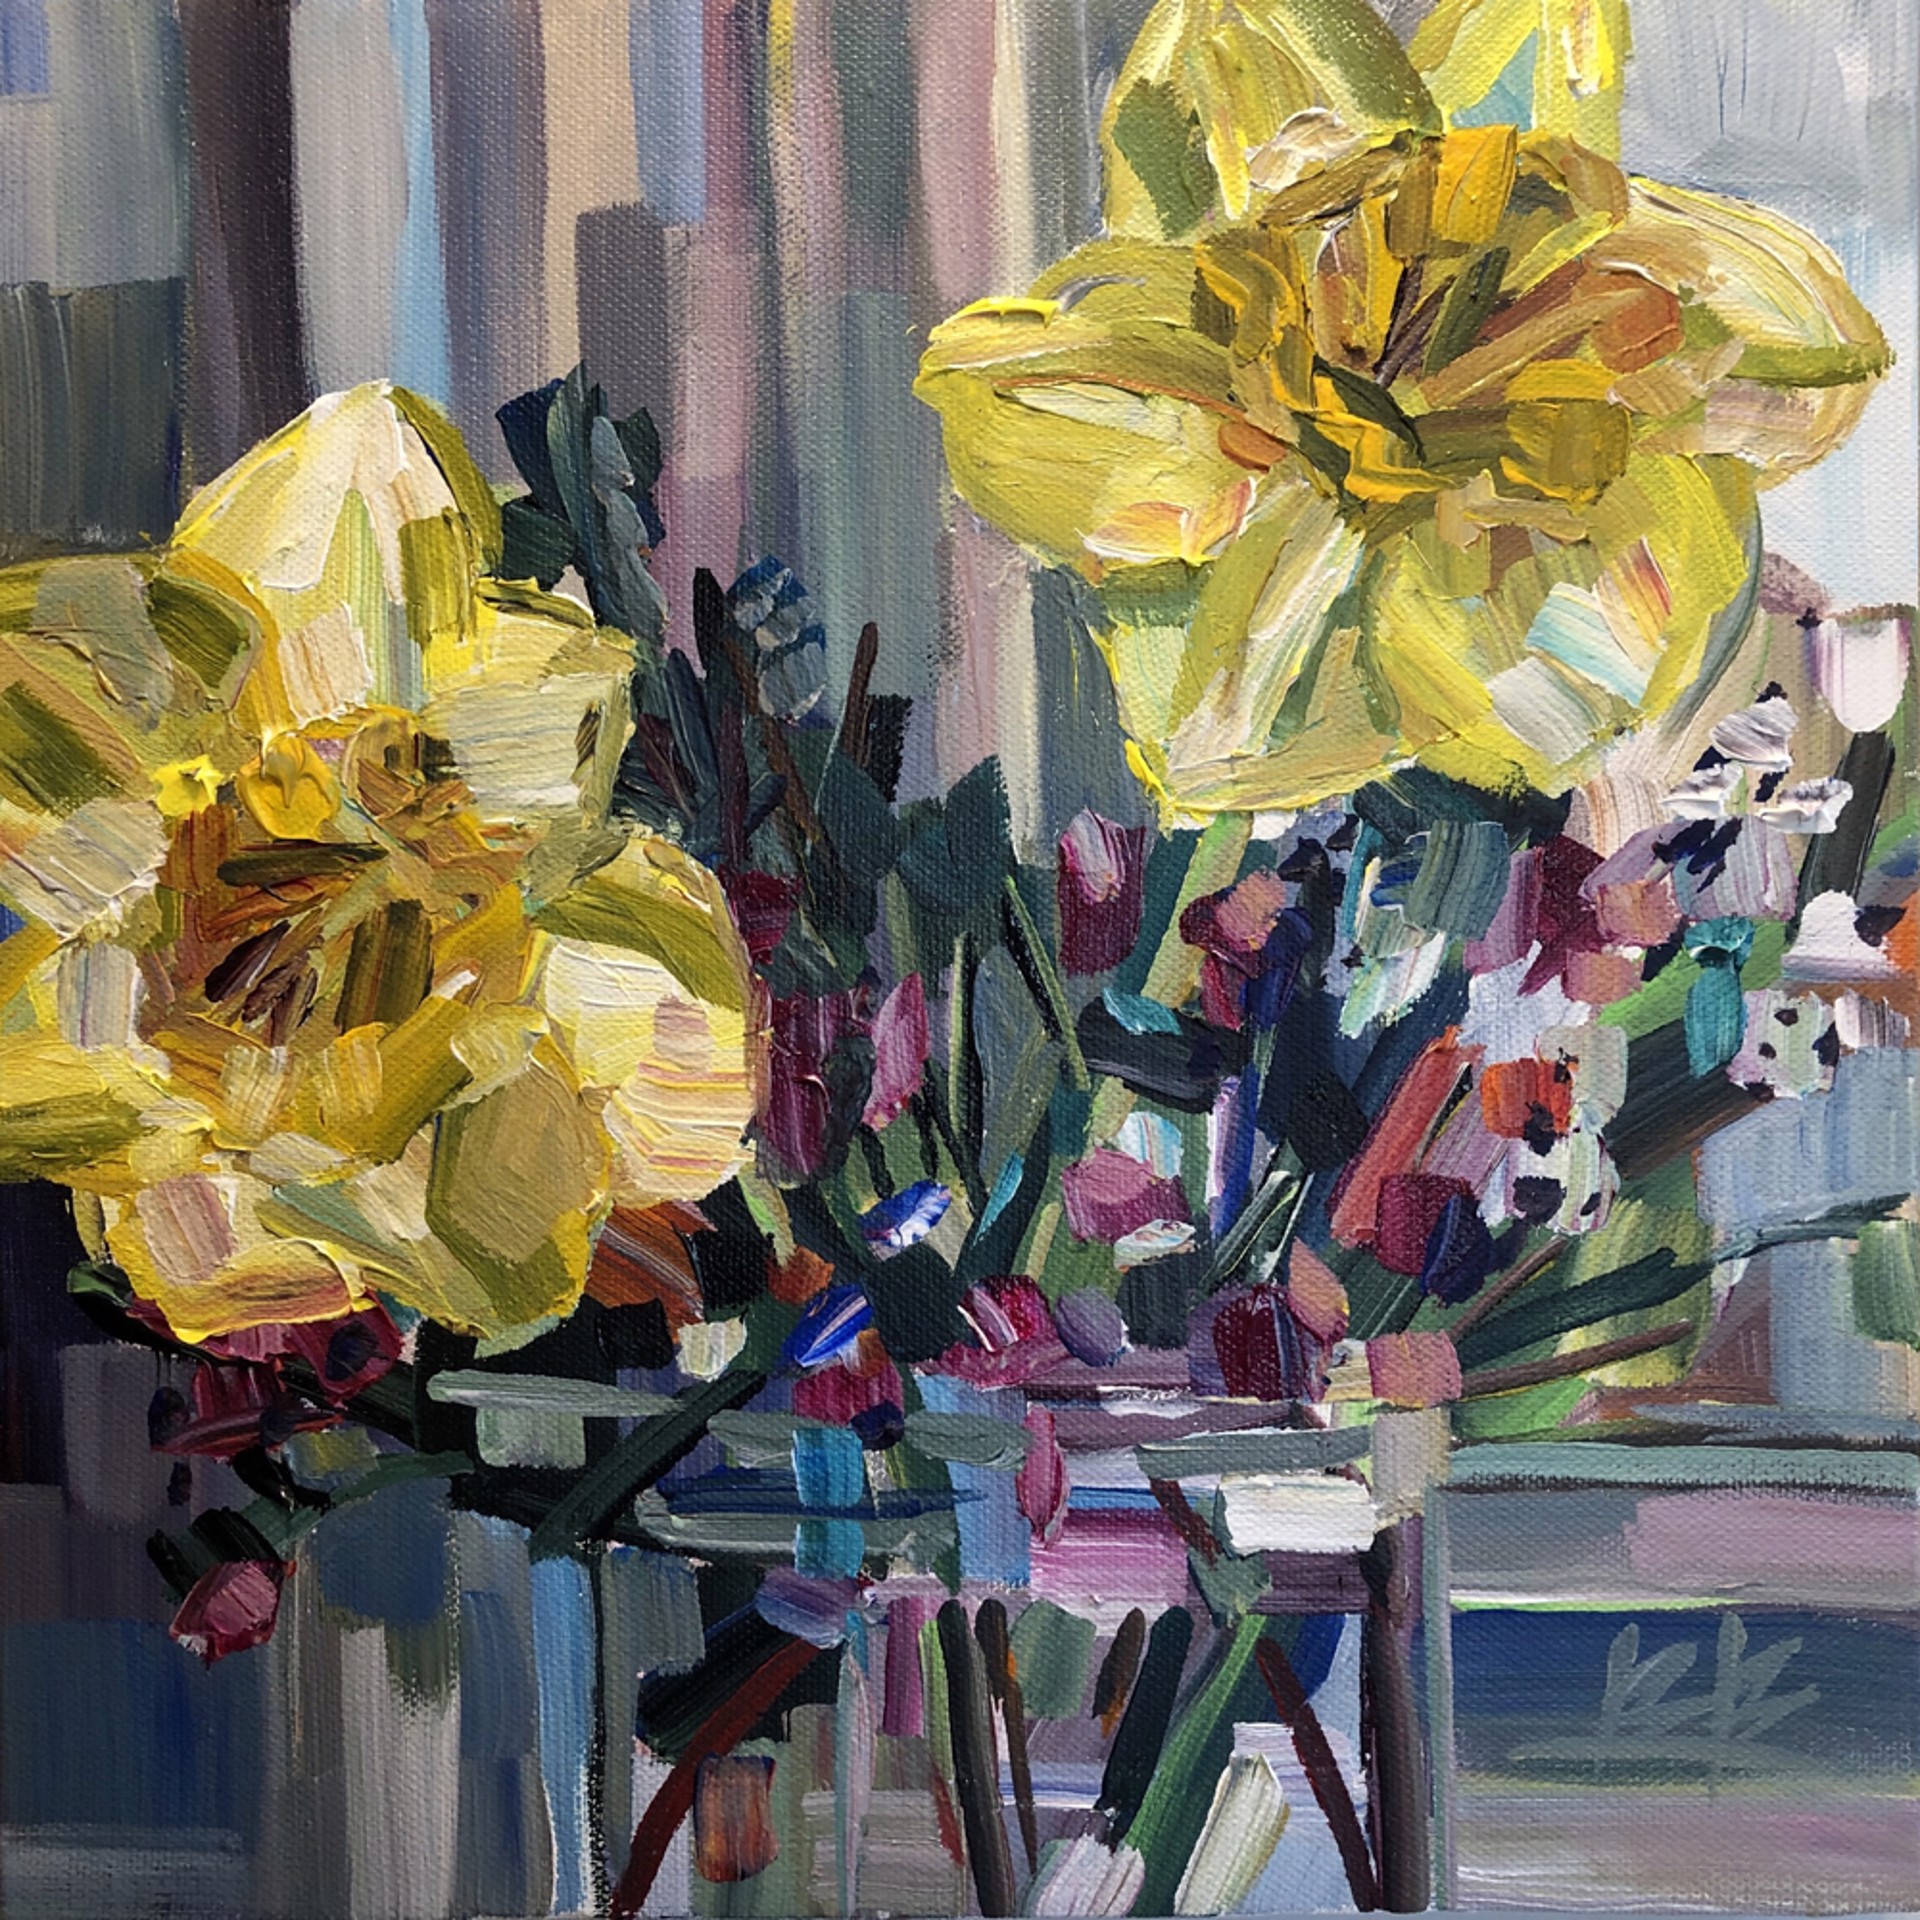 Daffodils in My Window by Brooke Borcherding